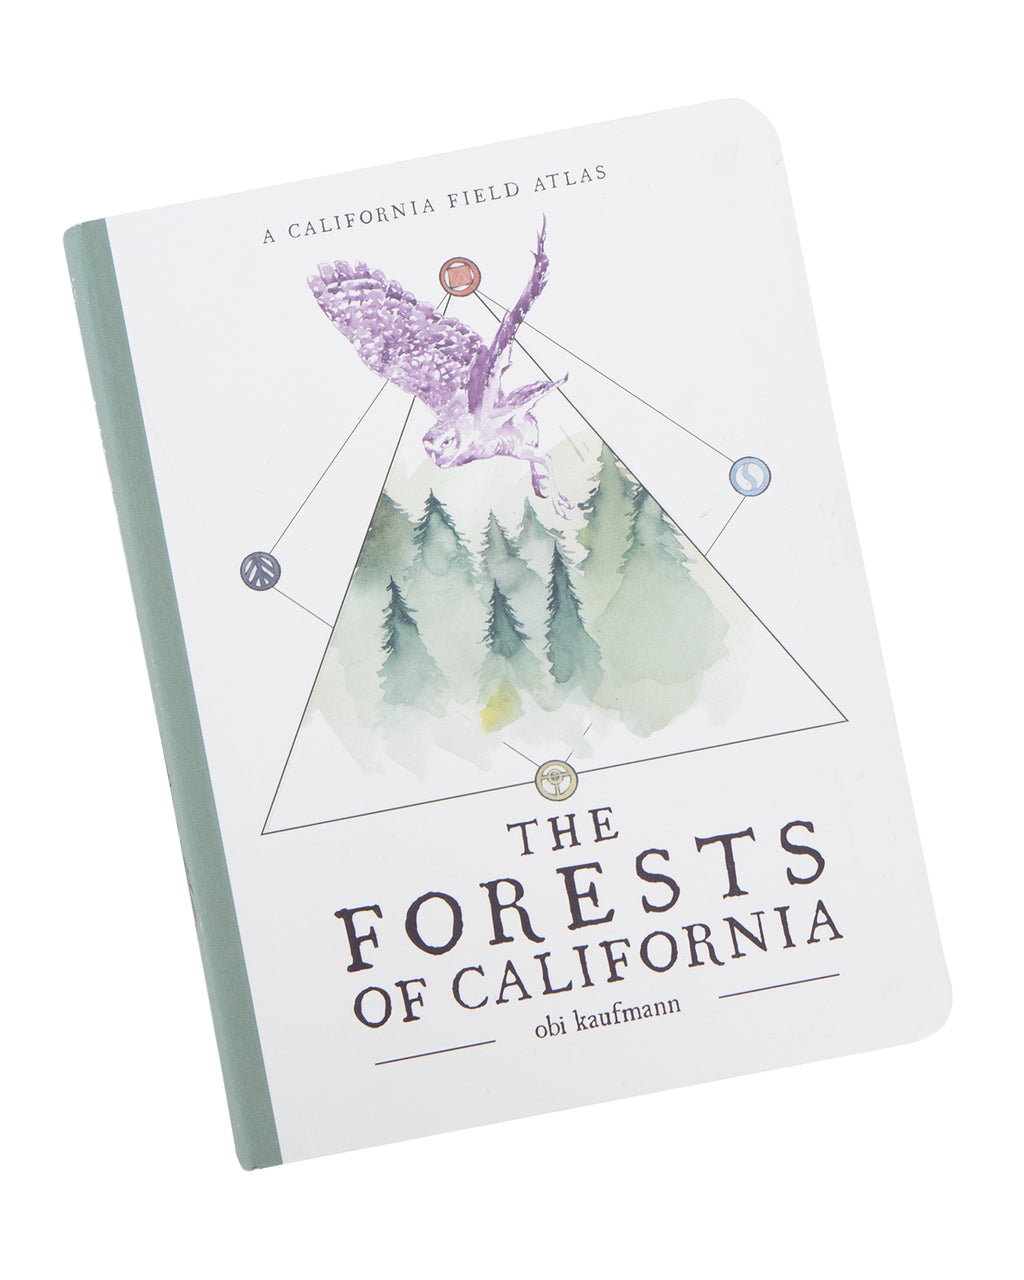 The Forest Of California, Obi Kaufmann